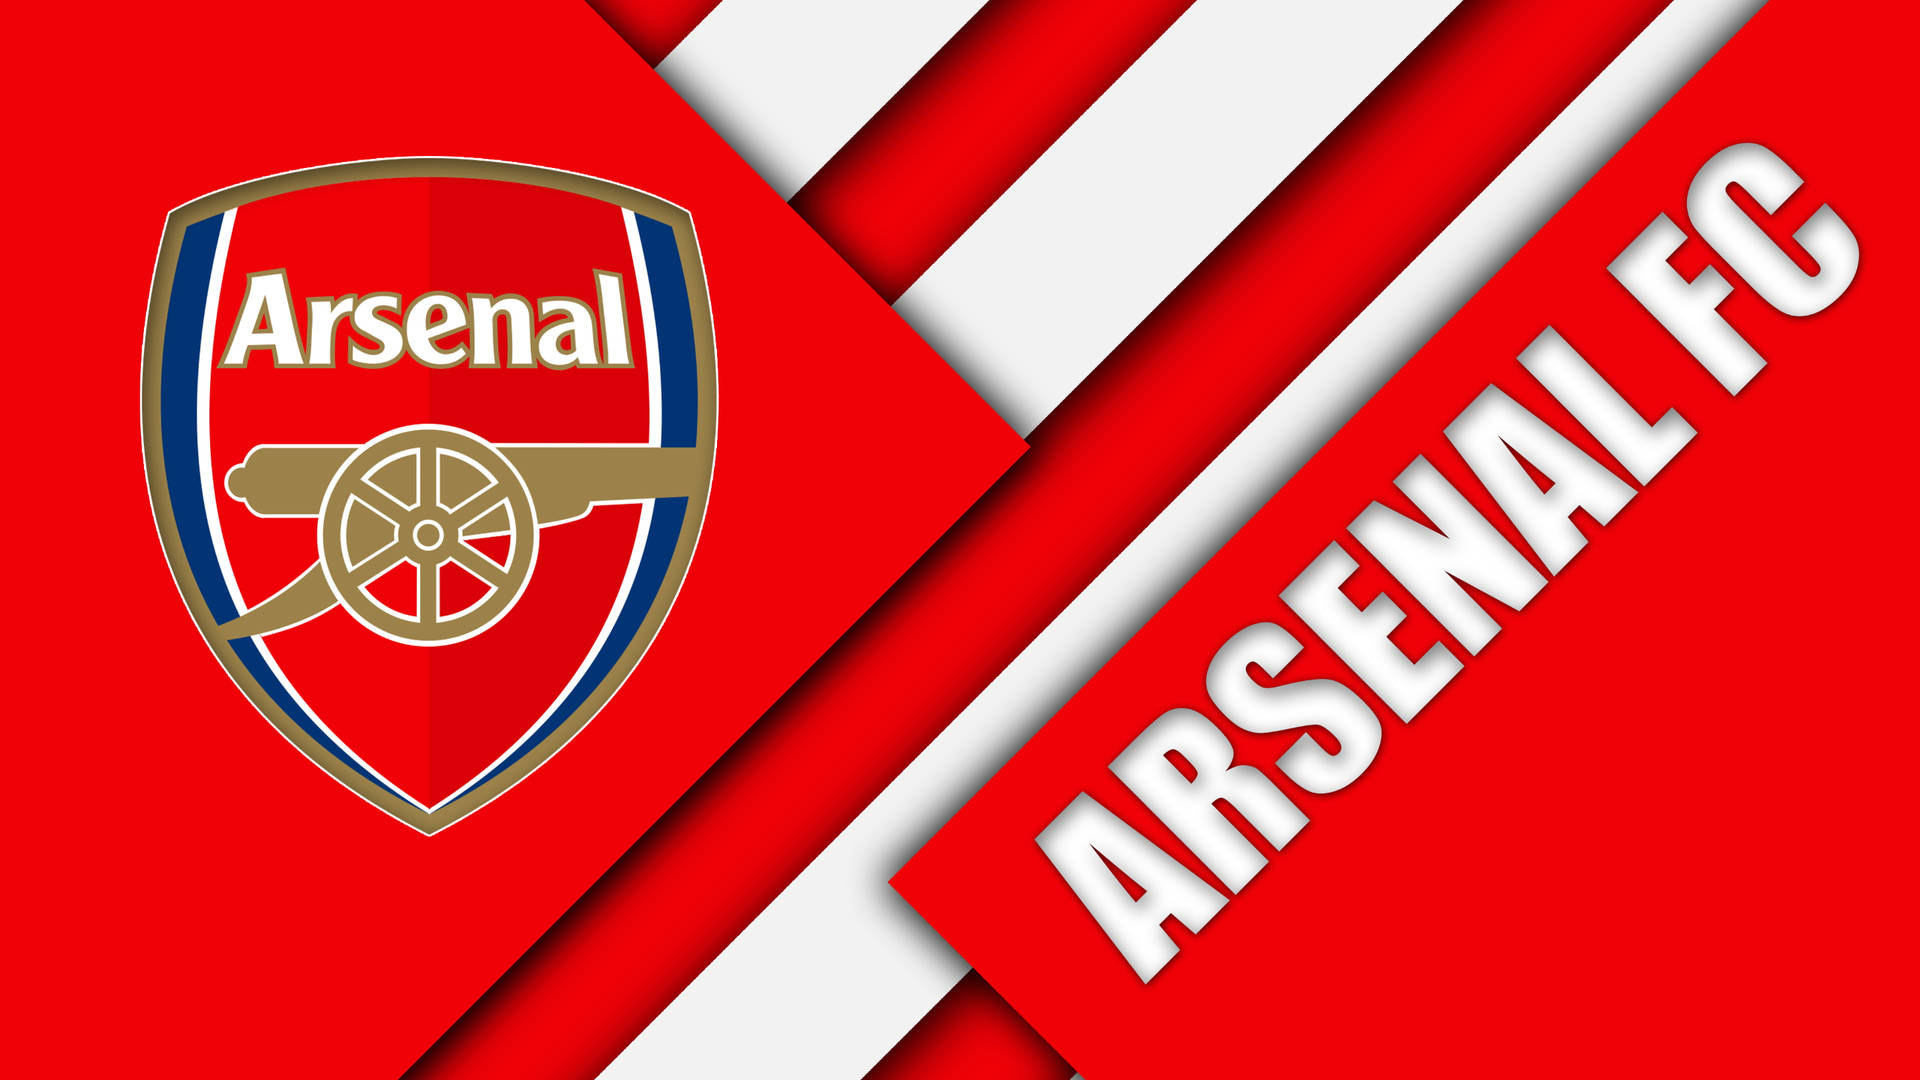 Arsenal Fc Digital Art Background